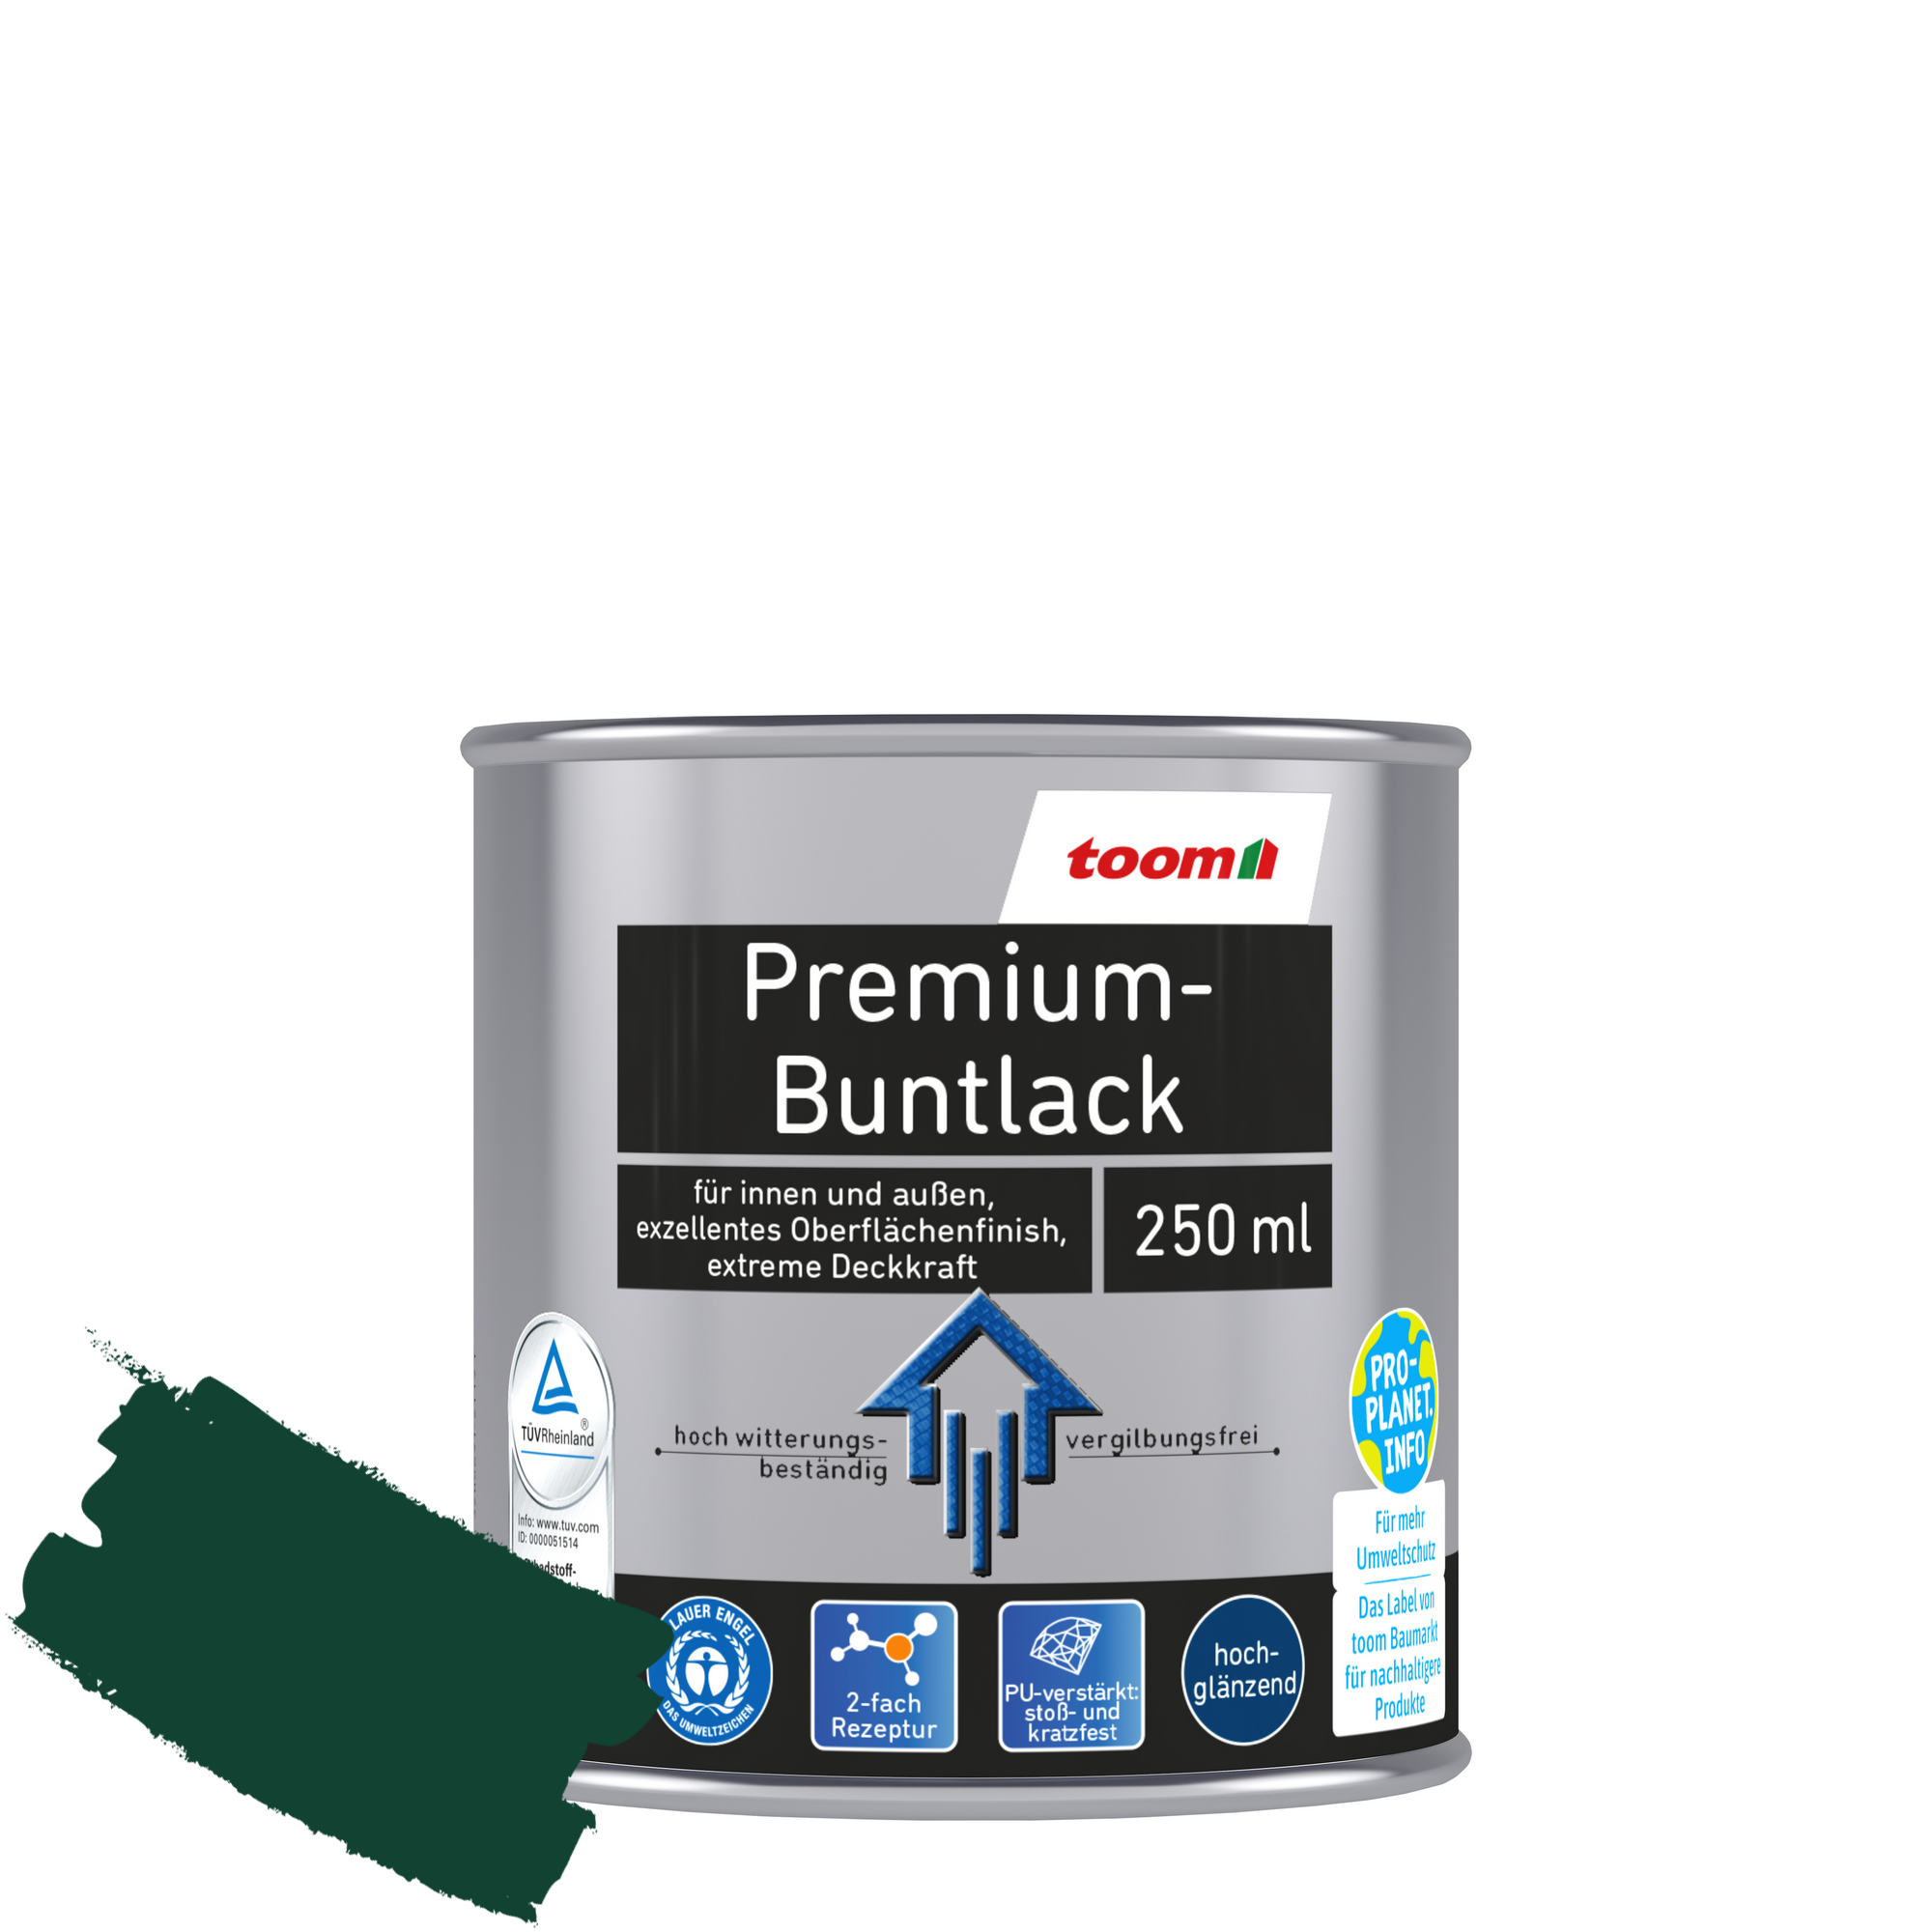 Premium-Buntlack moosgrün glänzend 250 ml + product picture